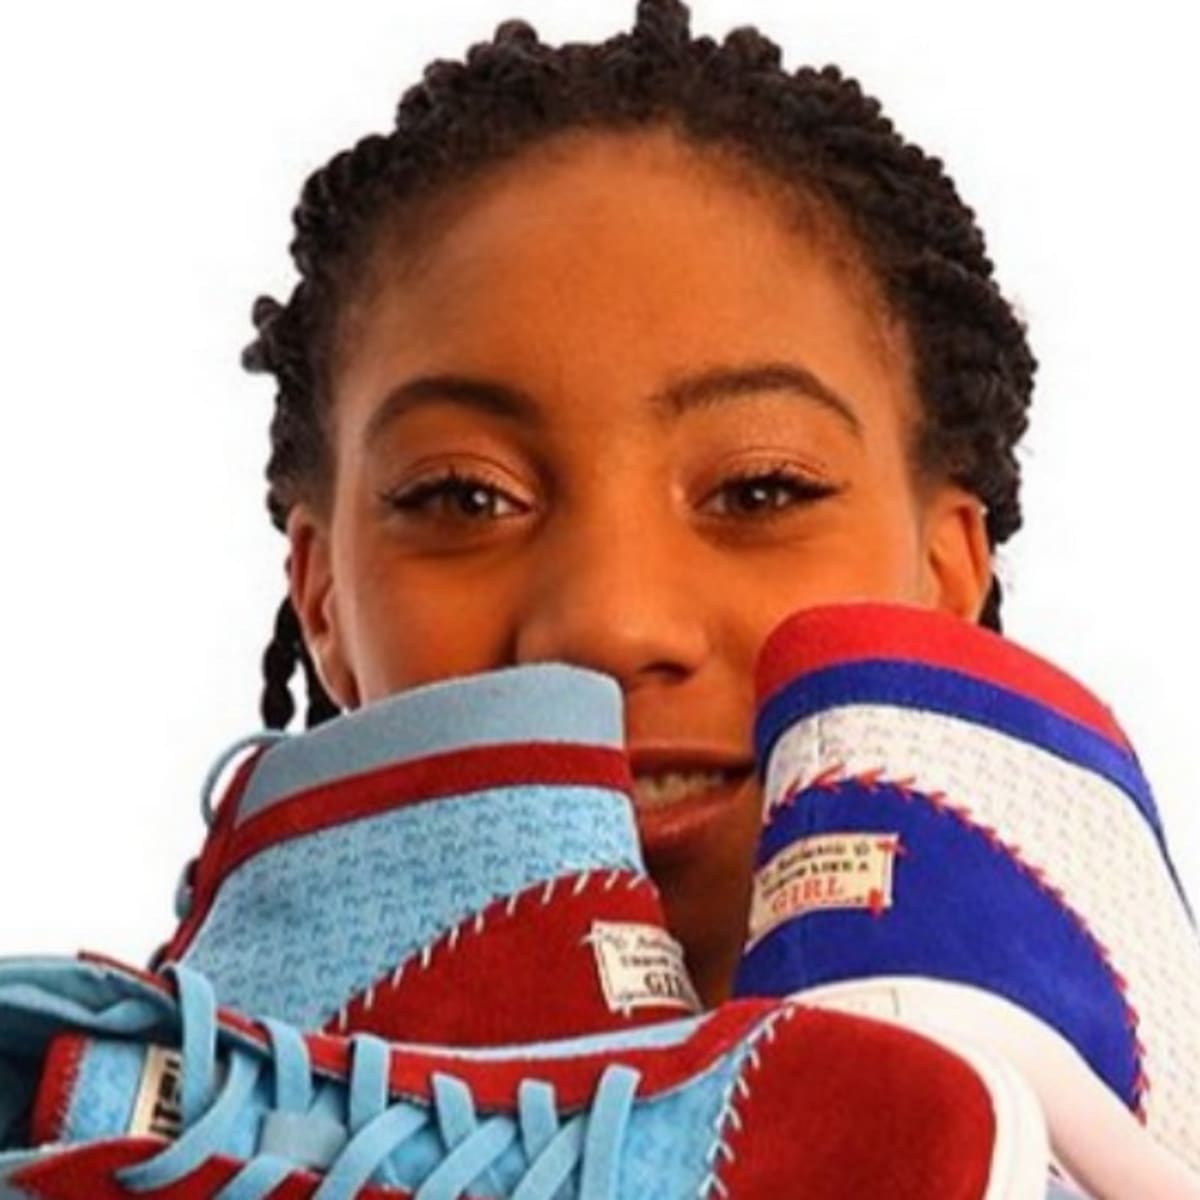 Little League star Mo'ne Davis designs sneaker line to benefit